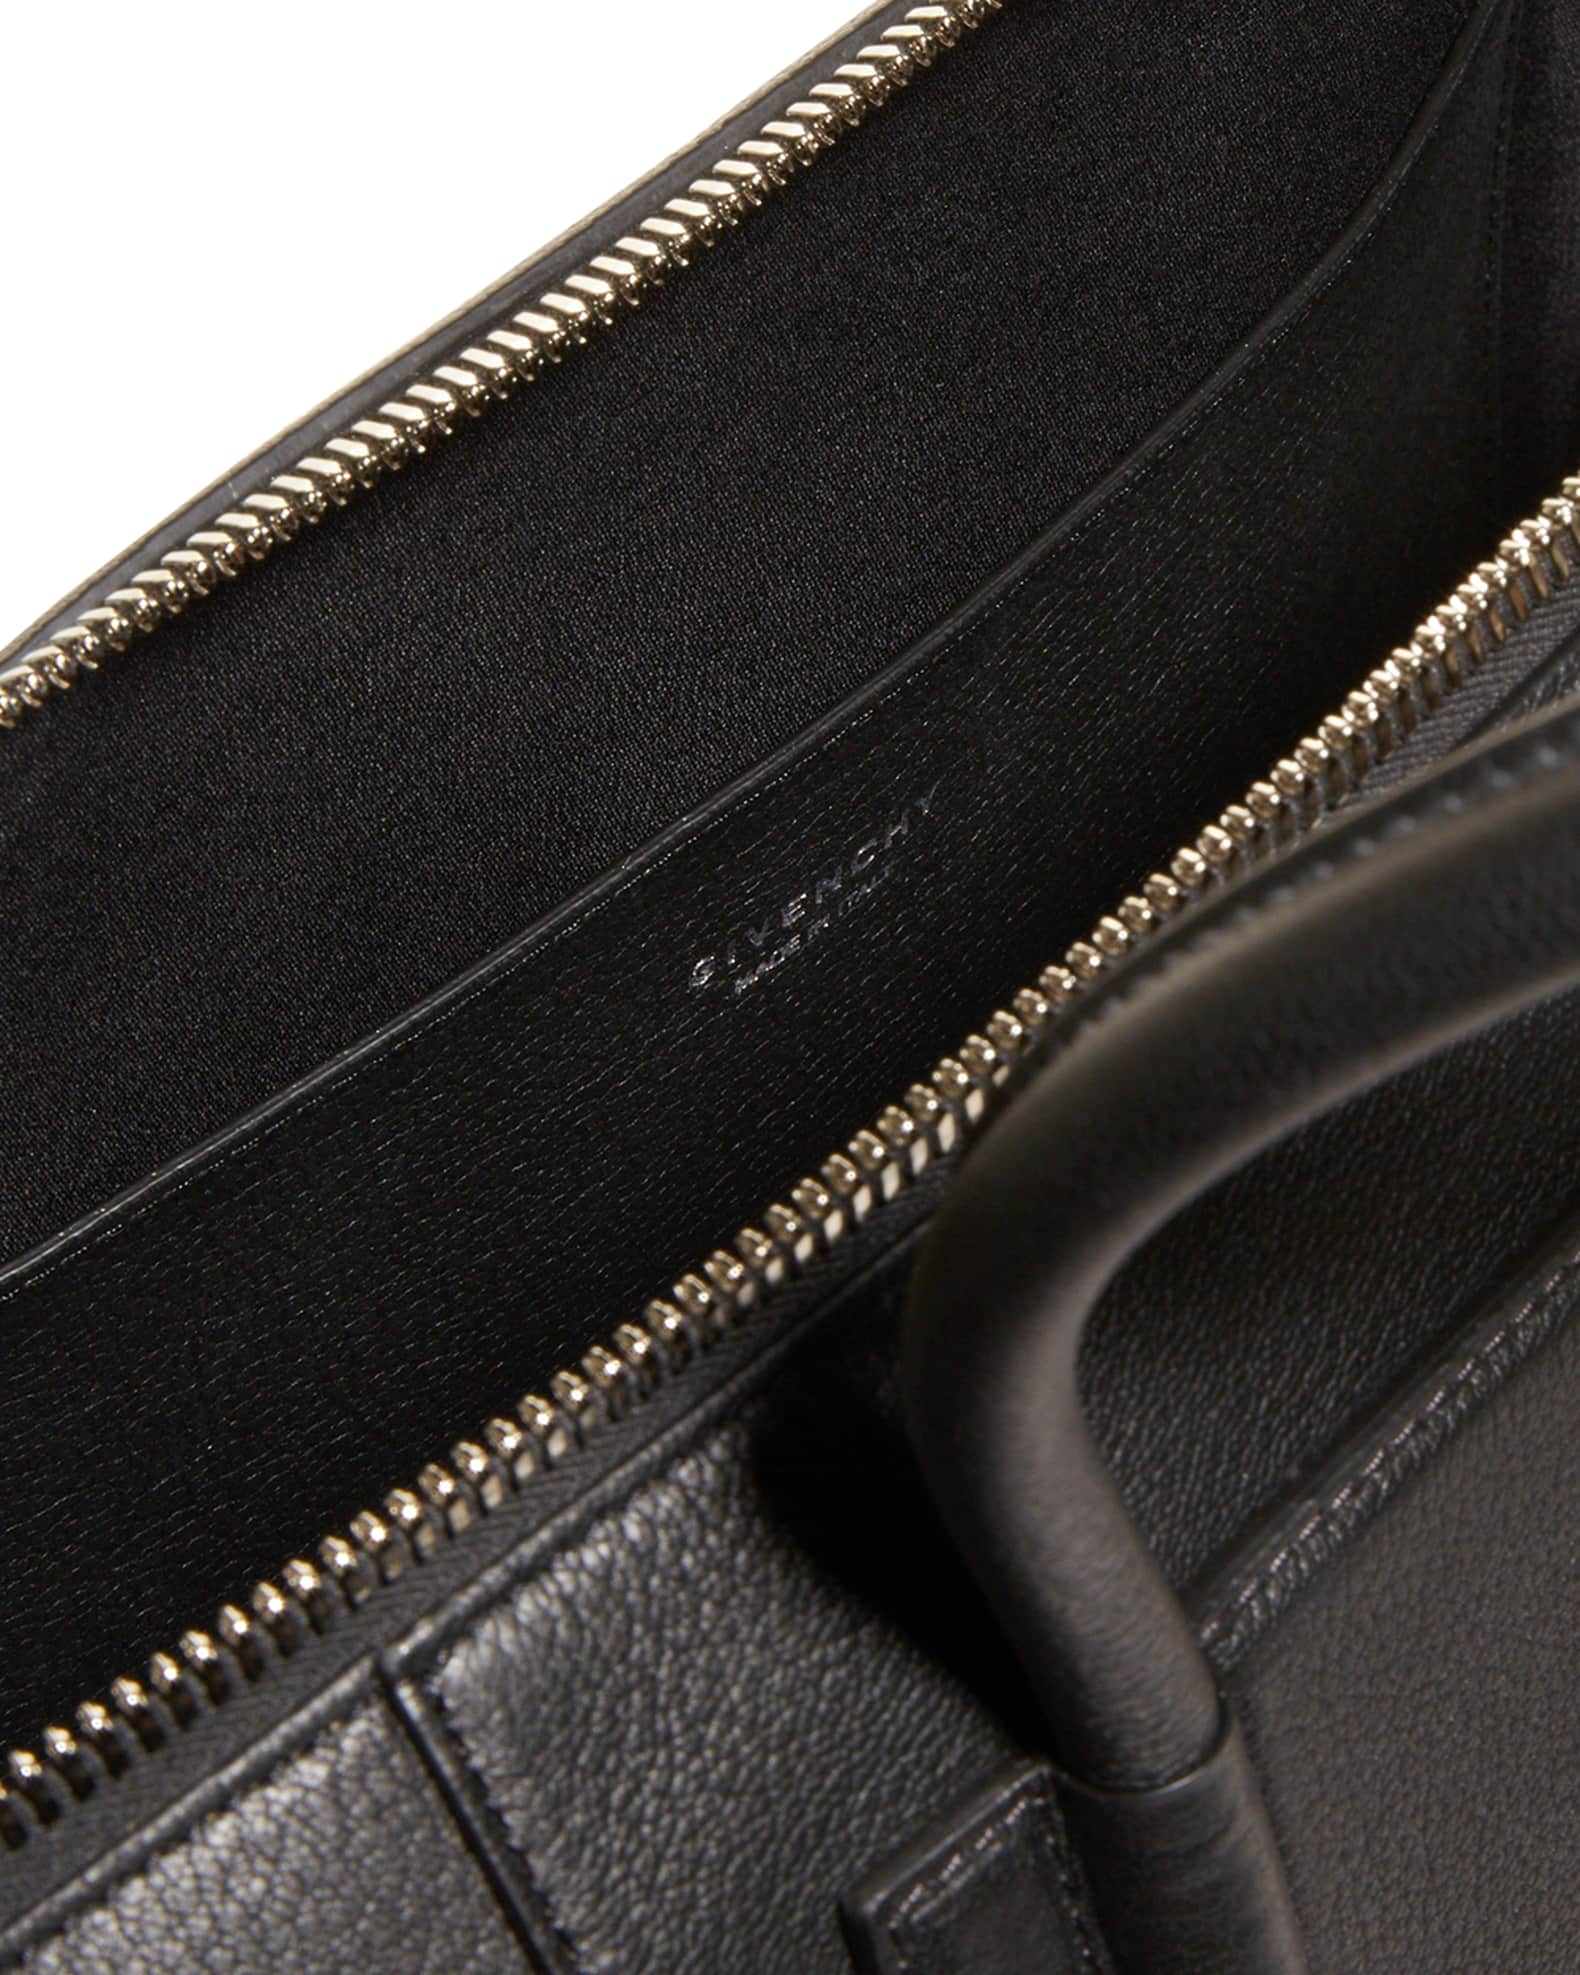 Givenchy Men's Antigona Lock Soft Leather Duffel Bag | Neiman Marcus